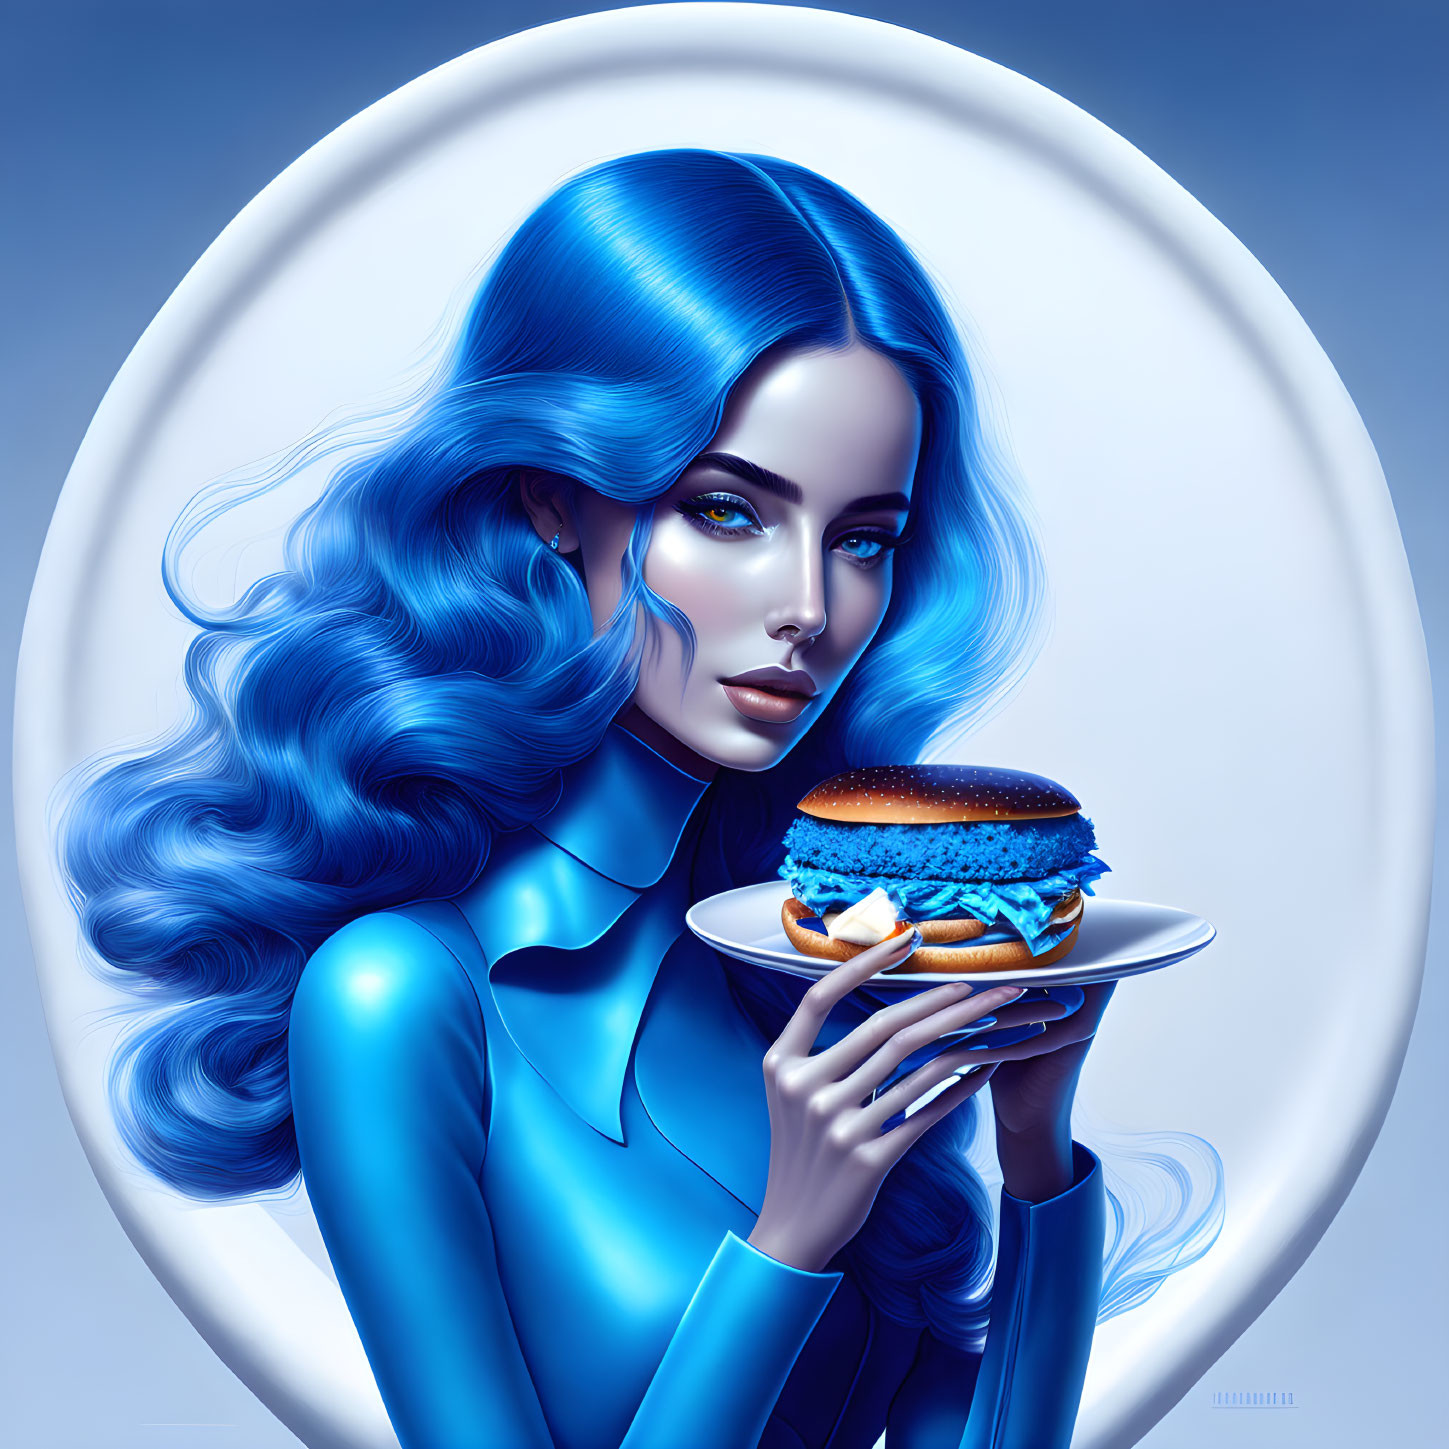 Blue-skinned woman holding blue burger on white circle background